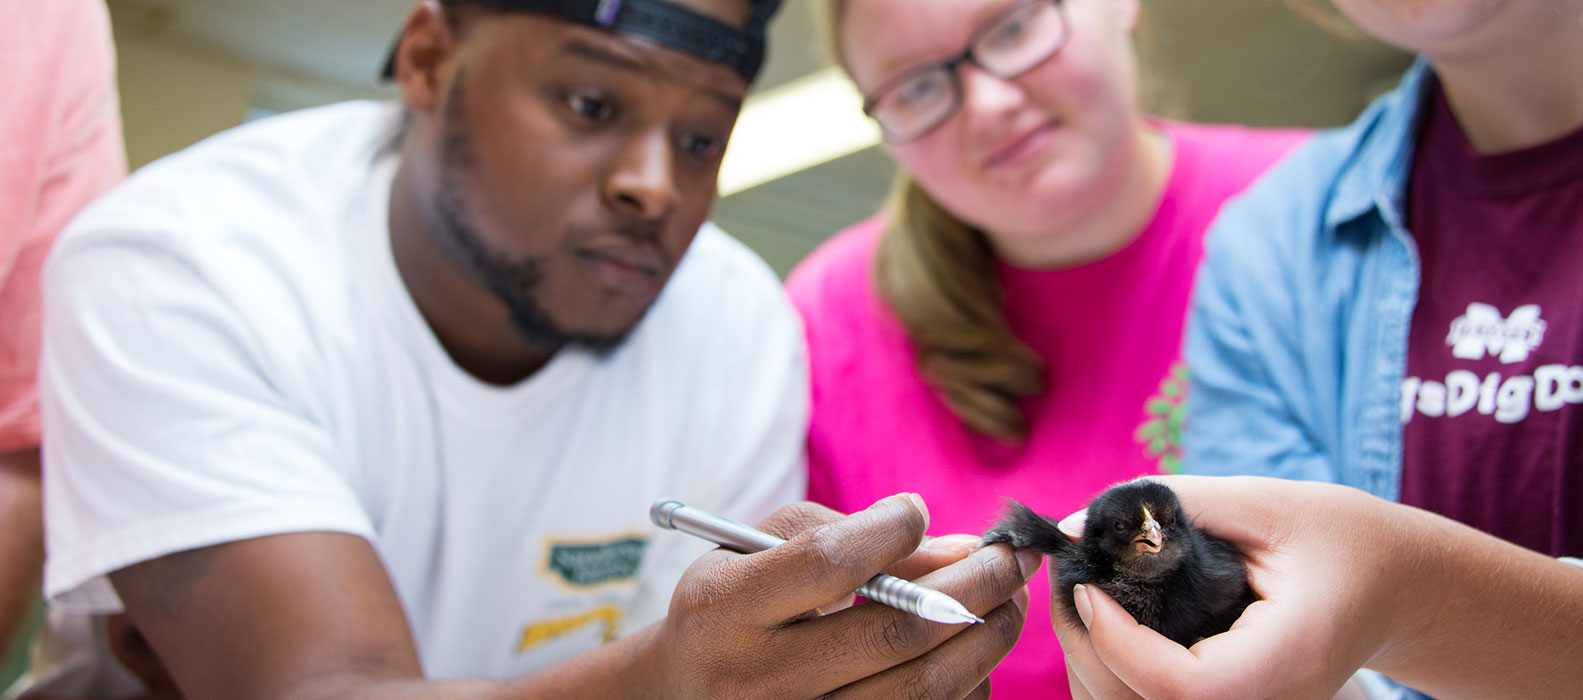 Students examine baby chick